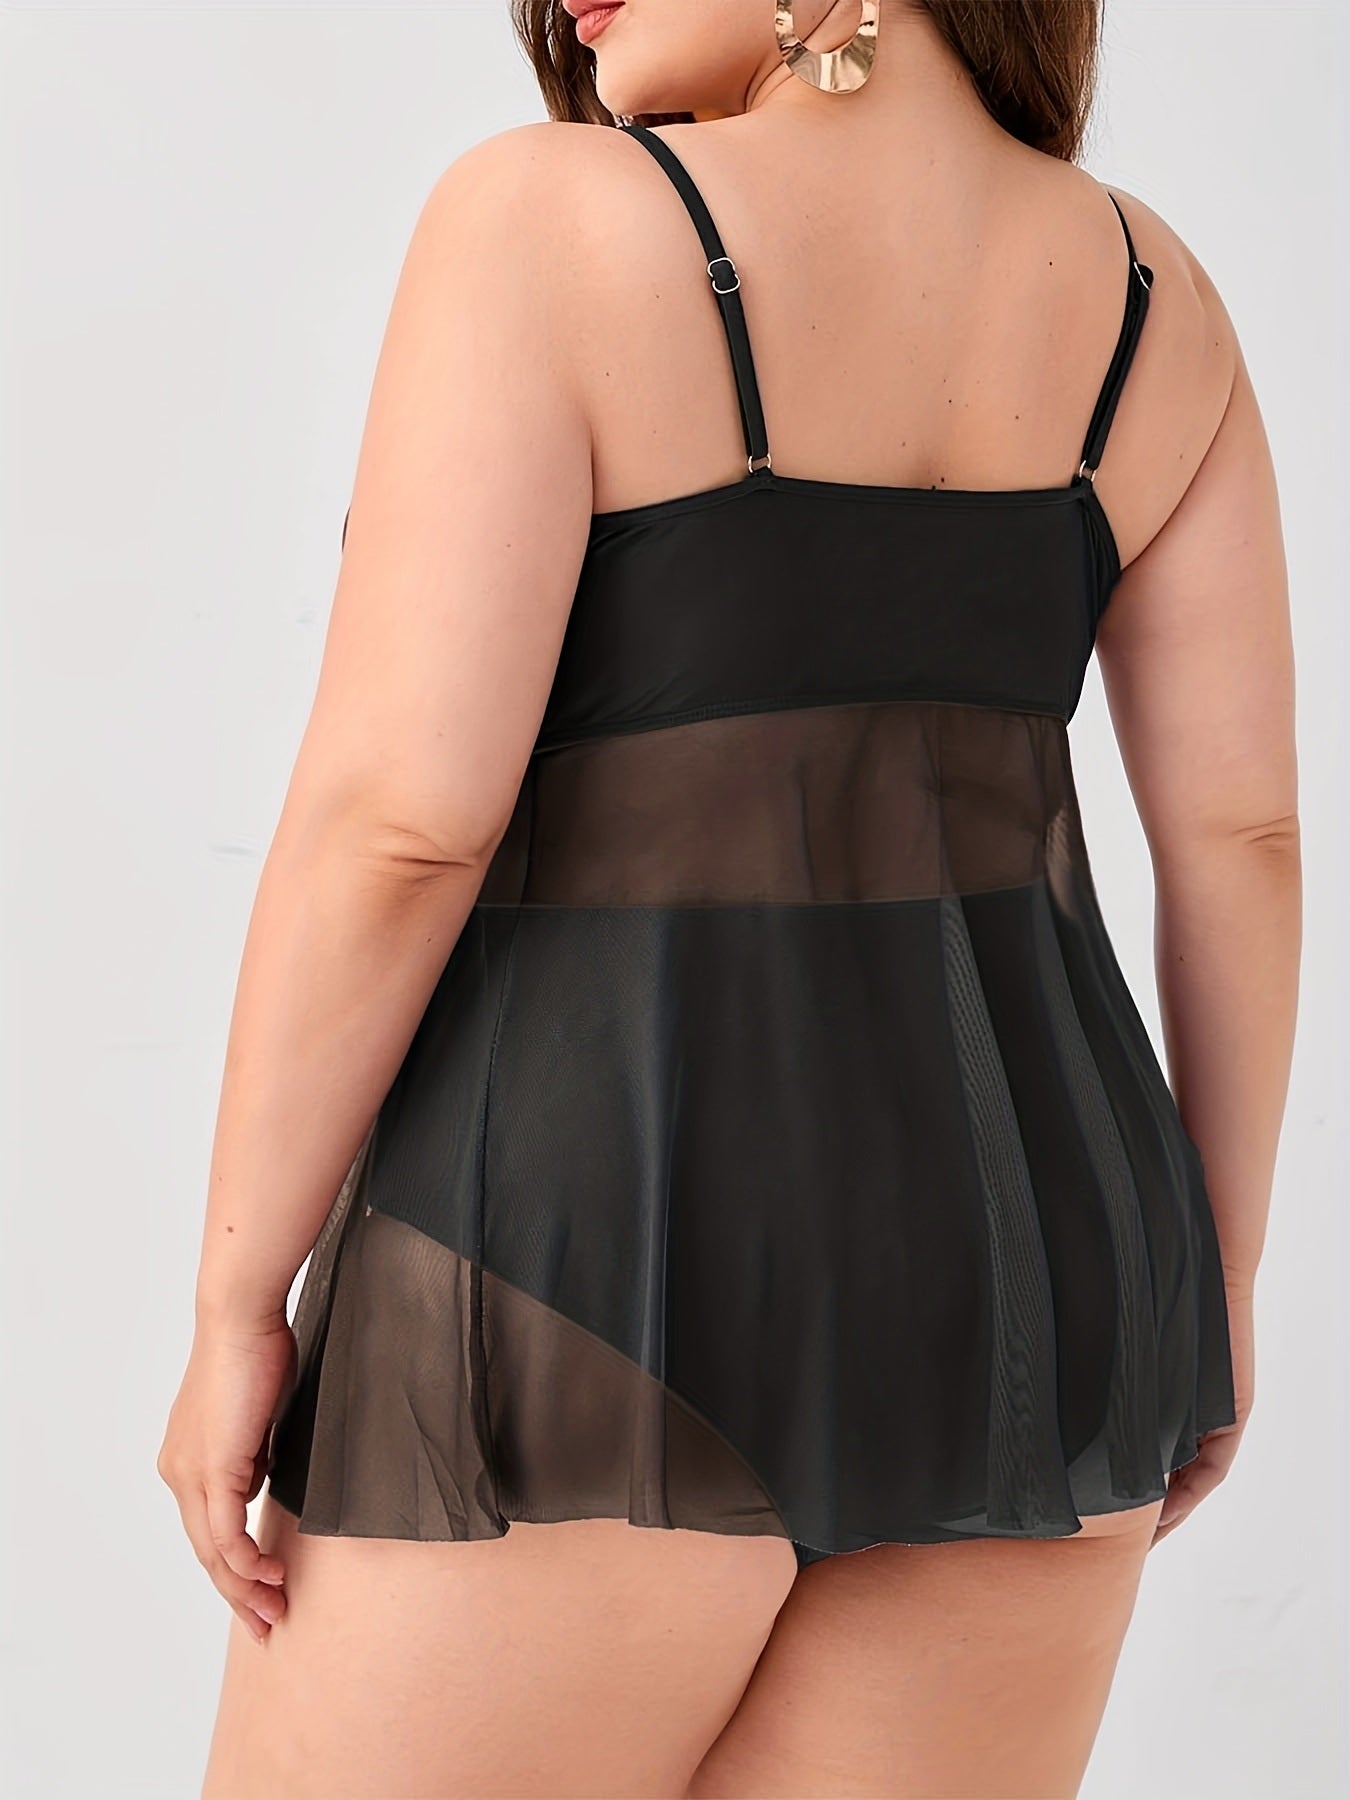 Semi Sheer Solid Bikini Set - High Stretch Swimsuit3P's Inclusive Beauty